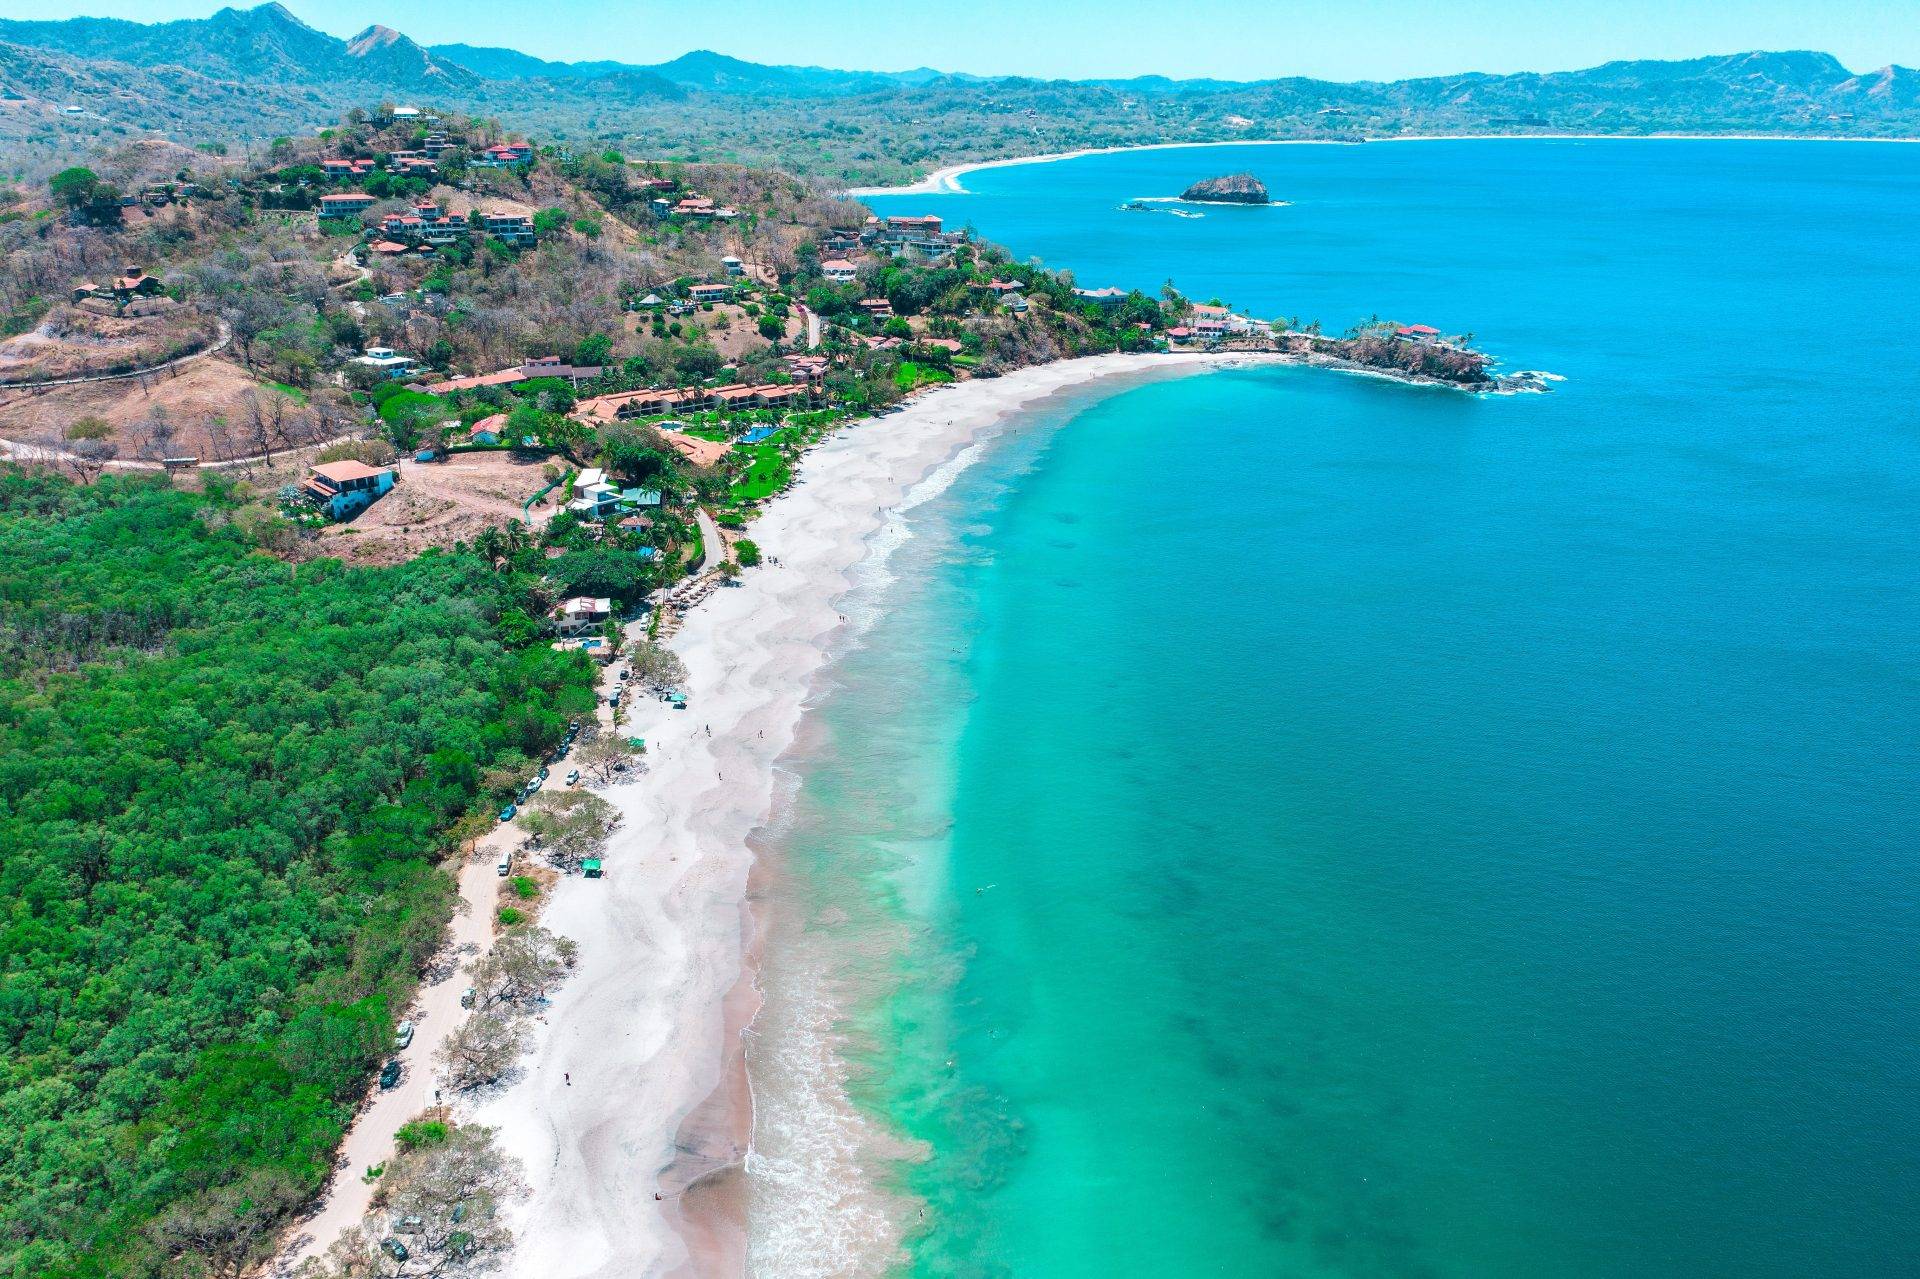 Playa Flamingo invest in Costa Rica real estate